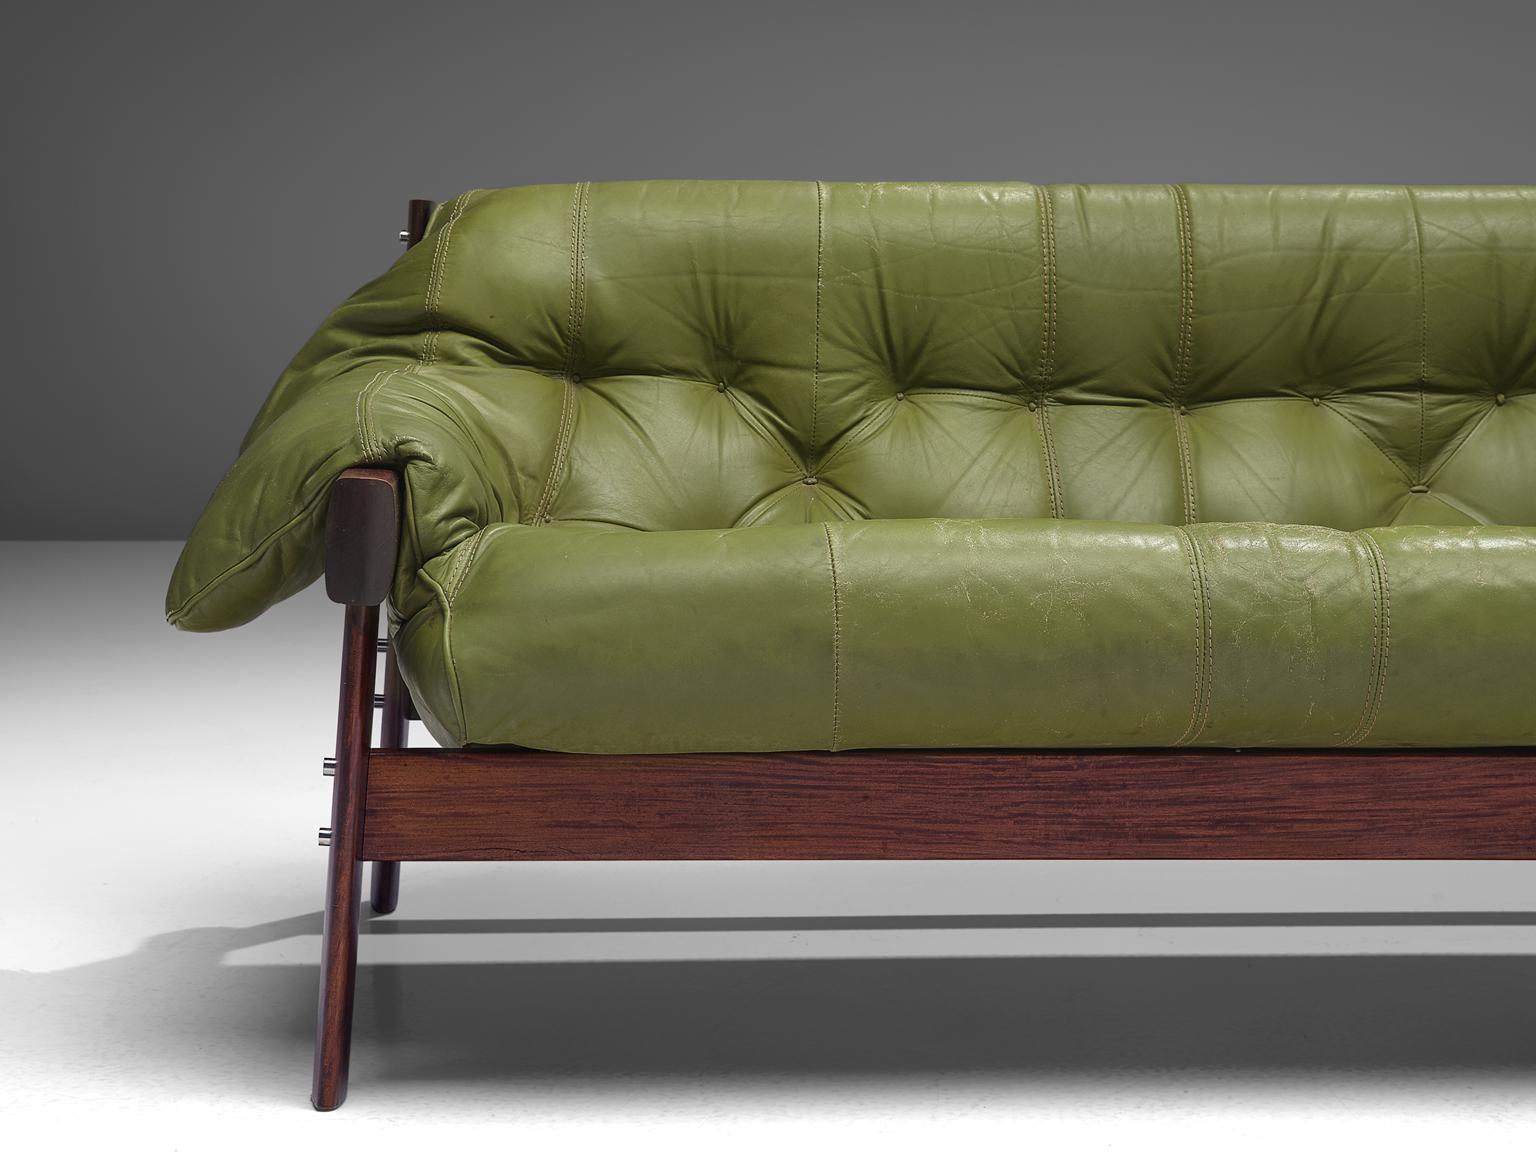 Percival Lafer Brasilianisches Sofa mit grünem Leder (Mitte des 20. Jahrhunderts)